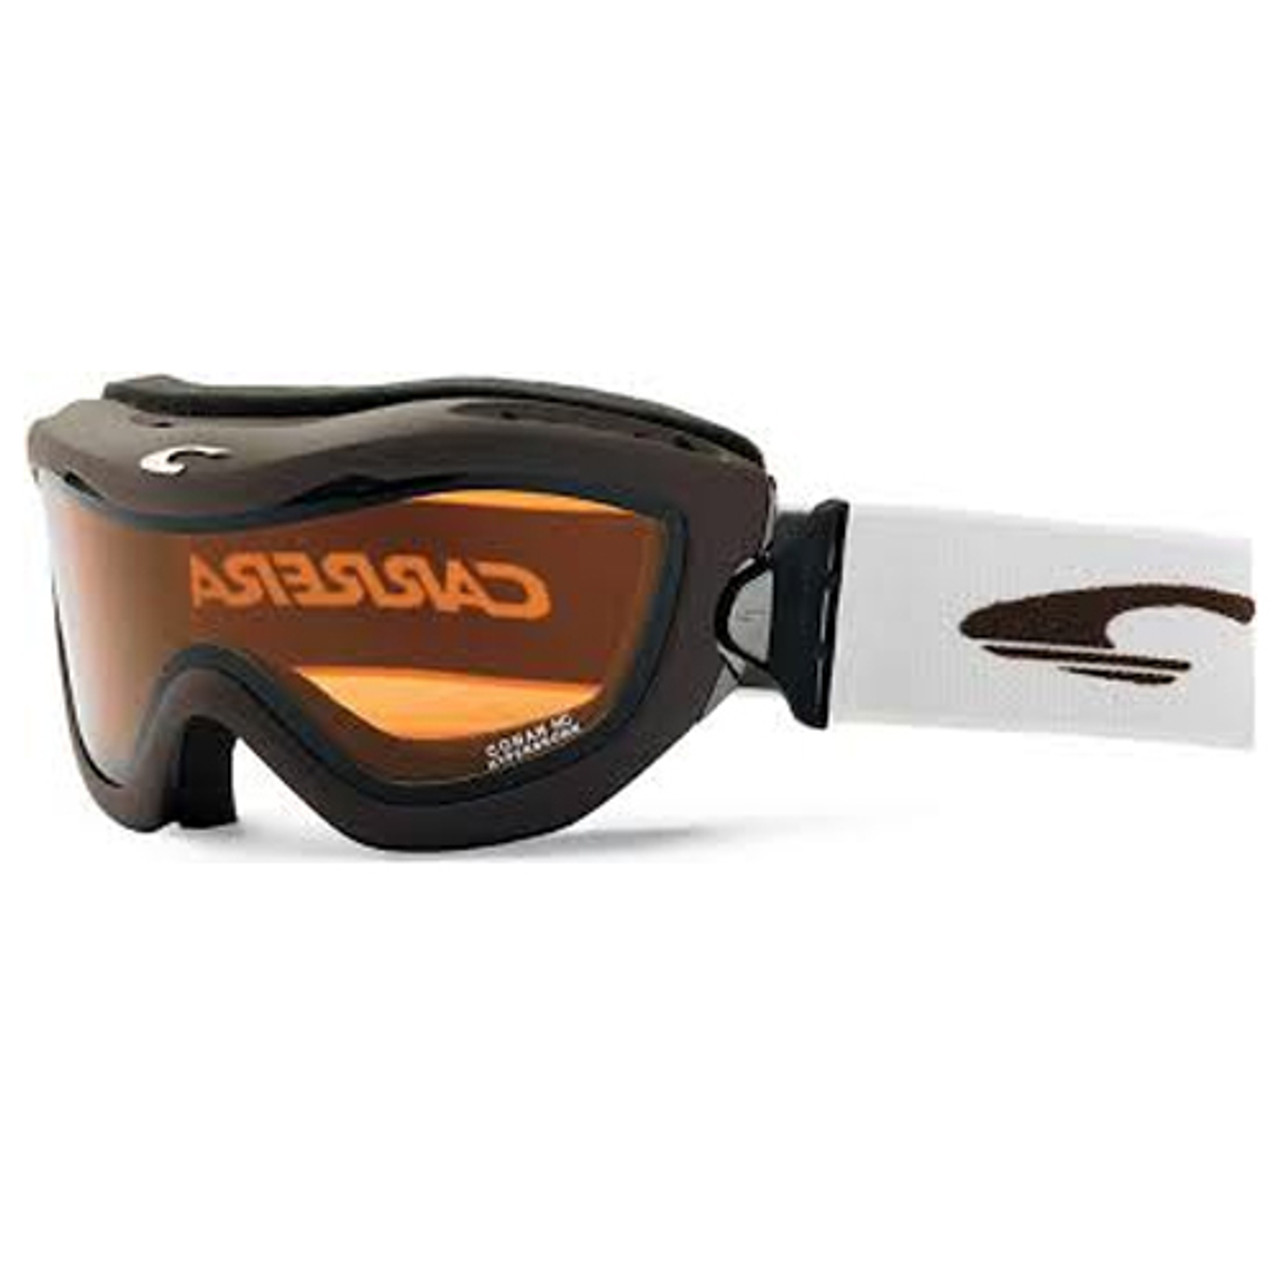 Lens for the Carrera Conan Pashlin Ski Goggles